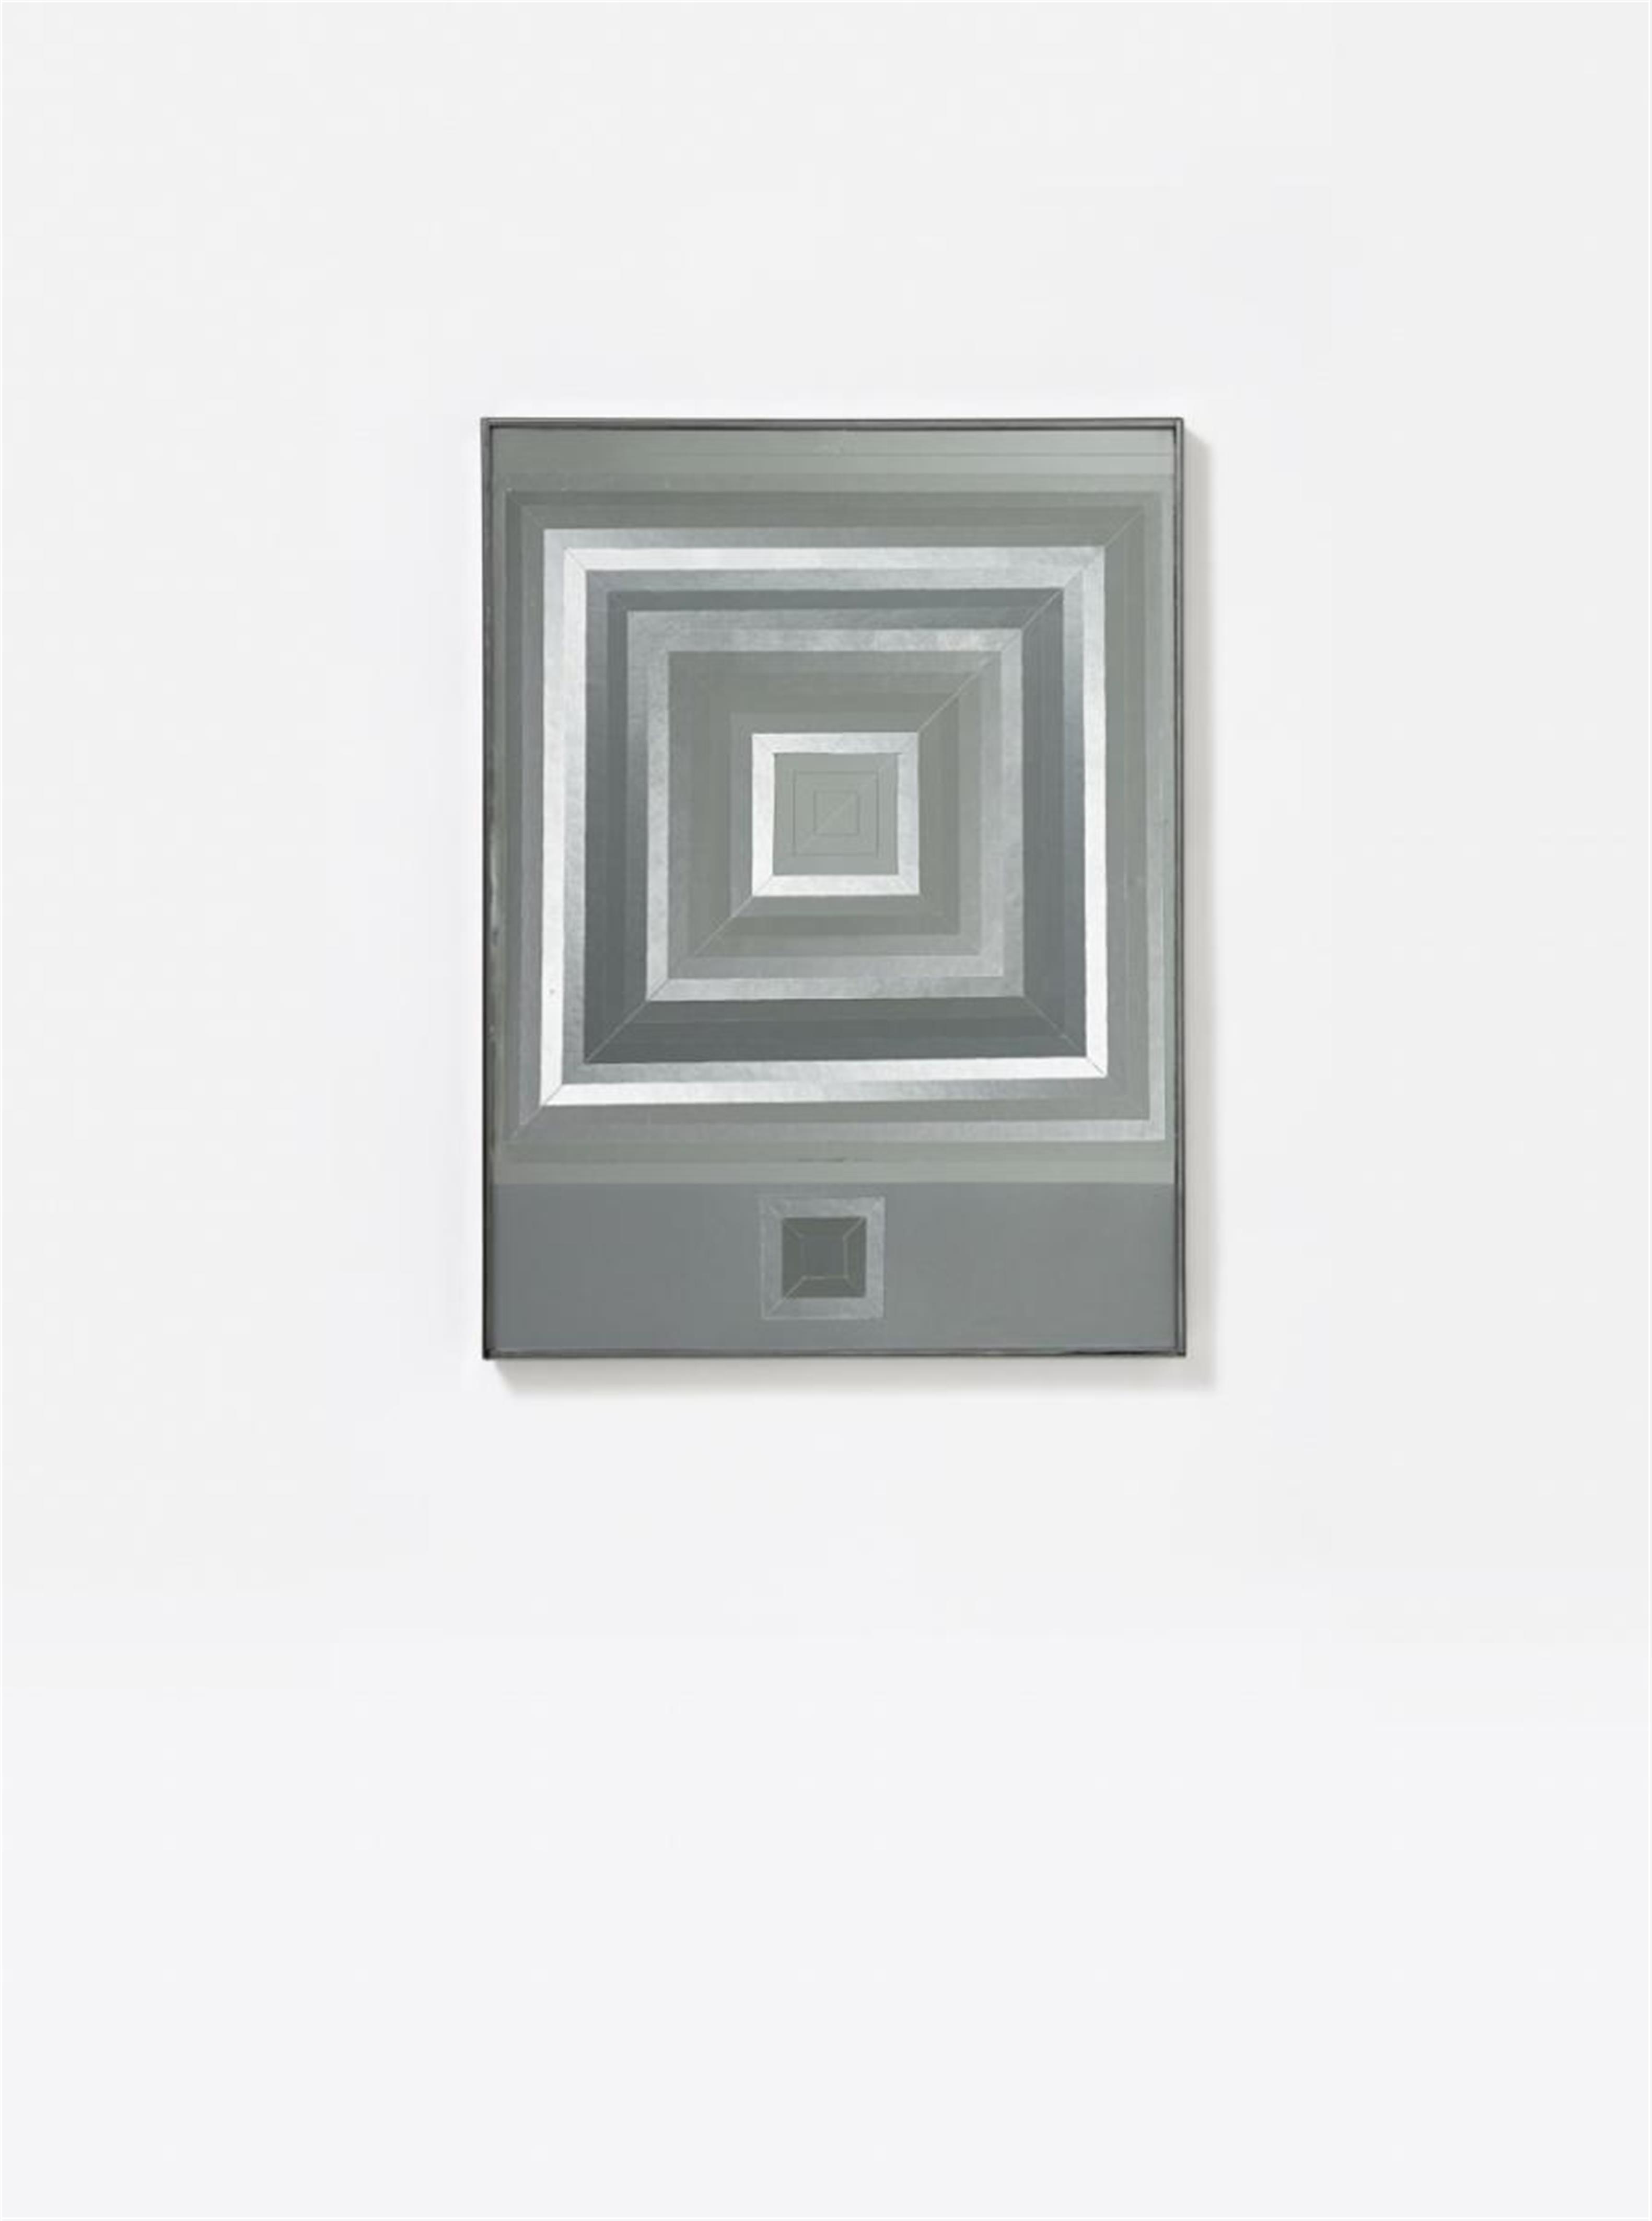 Heinz Mack - Lichtfenster (Hommage à Albers) (light window (hommage à Albers)) - image-1